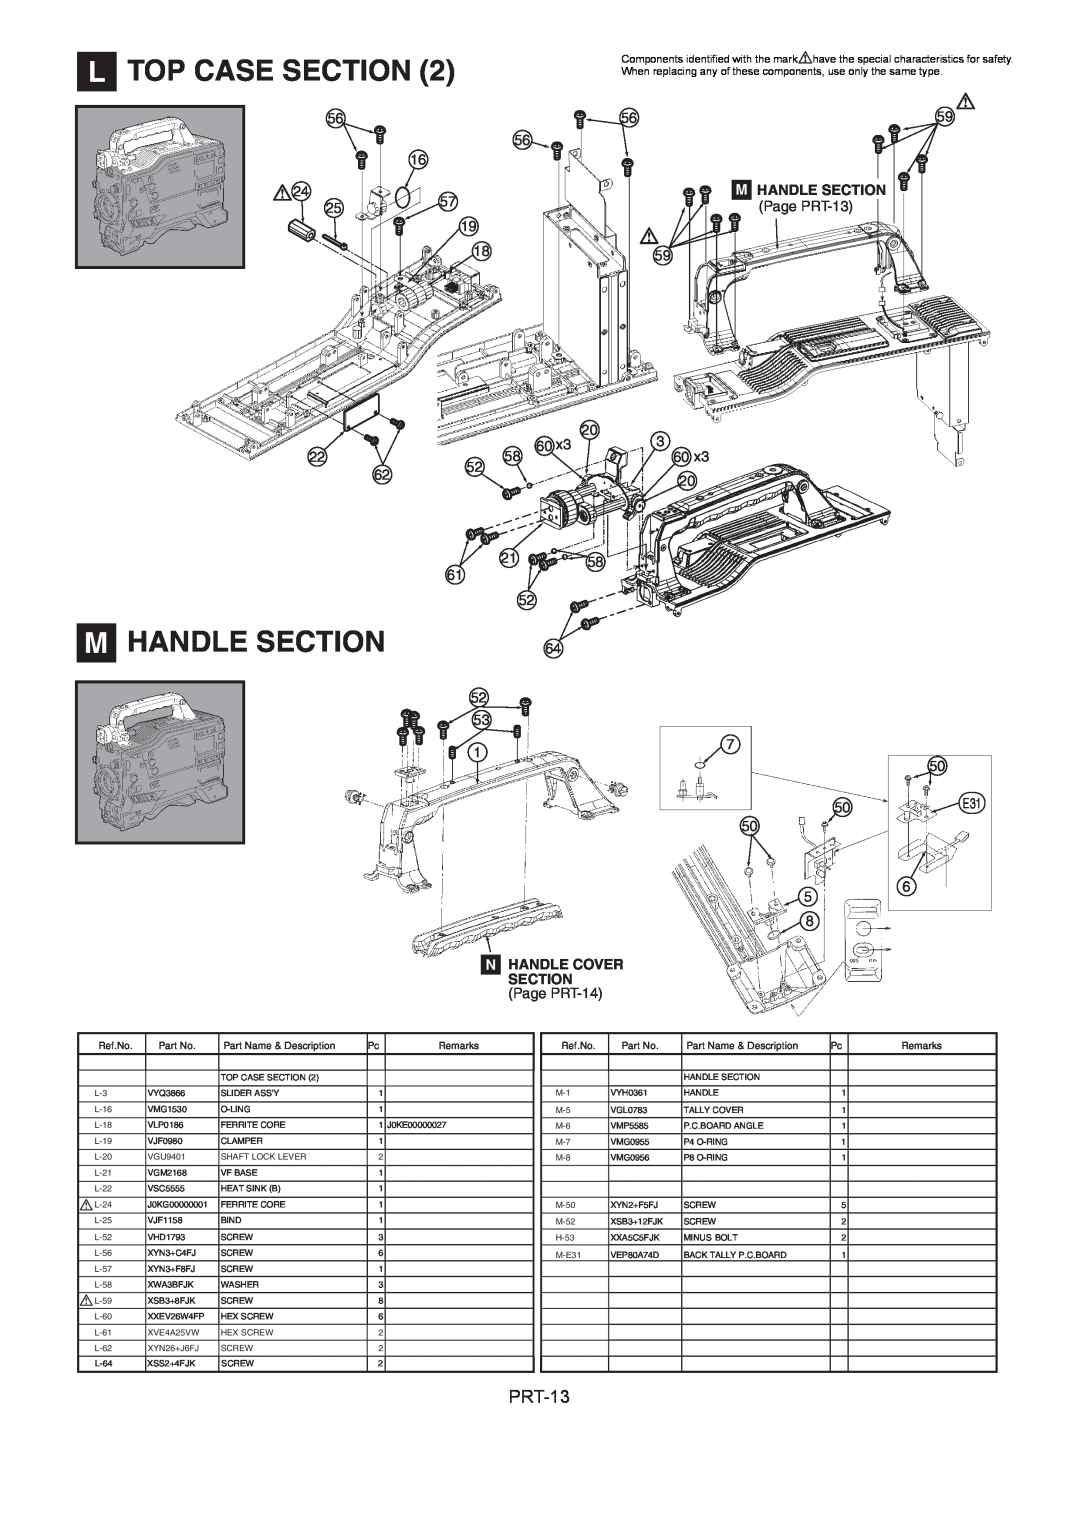 Panasonic AJ-HDX900MC manual M Handle Section, L Top Case Section, 1859, M HANDLE SECTION Page PRT-13, Ref.No, Remarks 